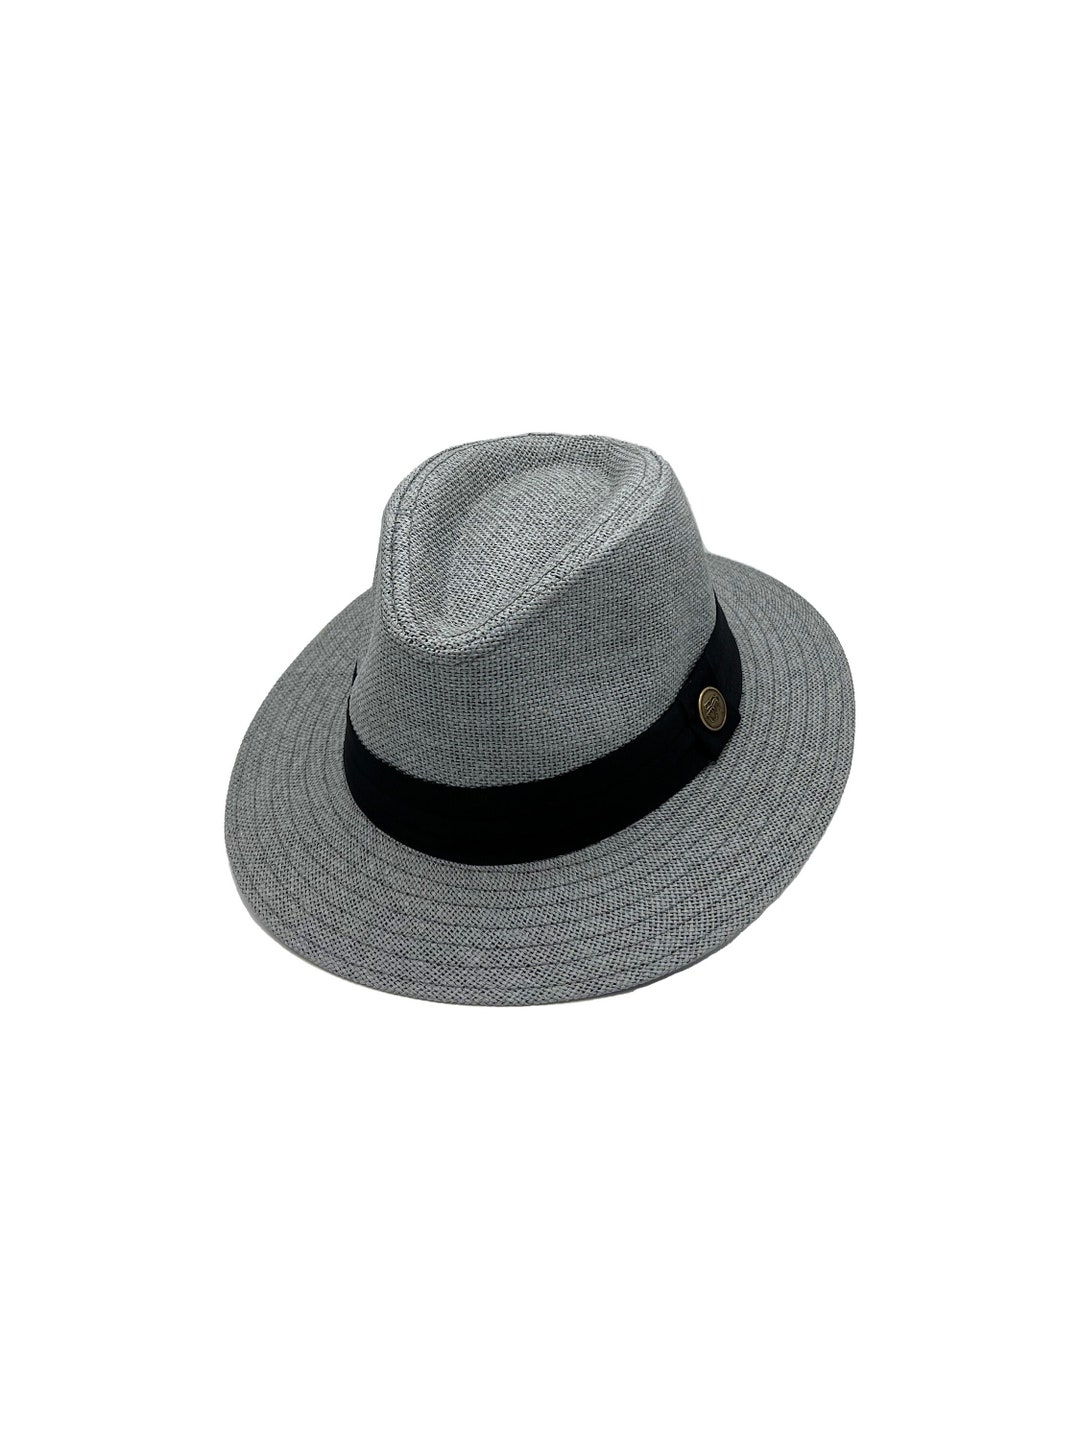 Gray Straw Panama Hat, Stiff Brim Hat, Men Summer Hat, Women Safari Hat ...